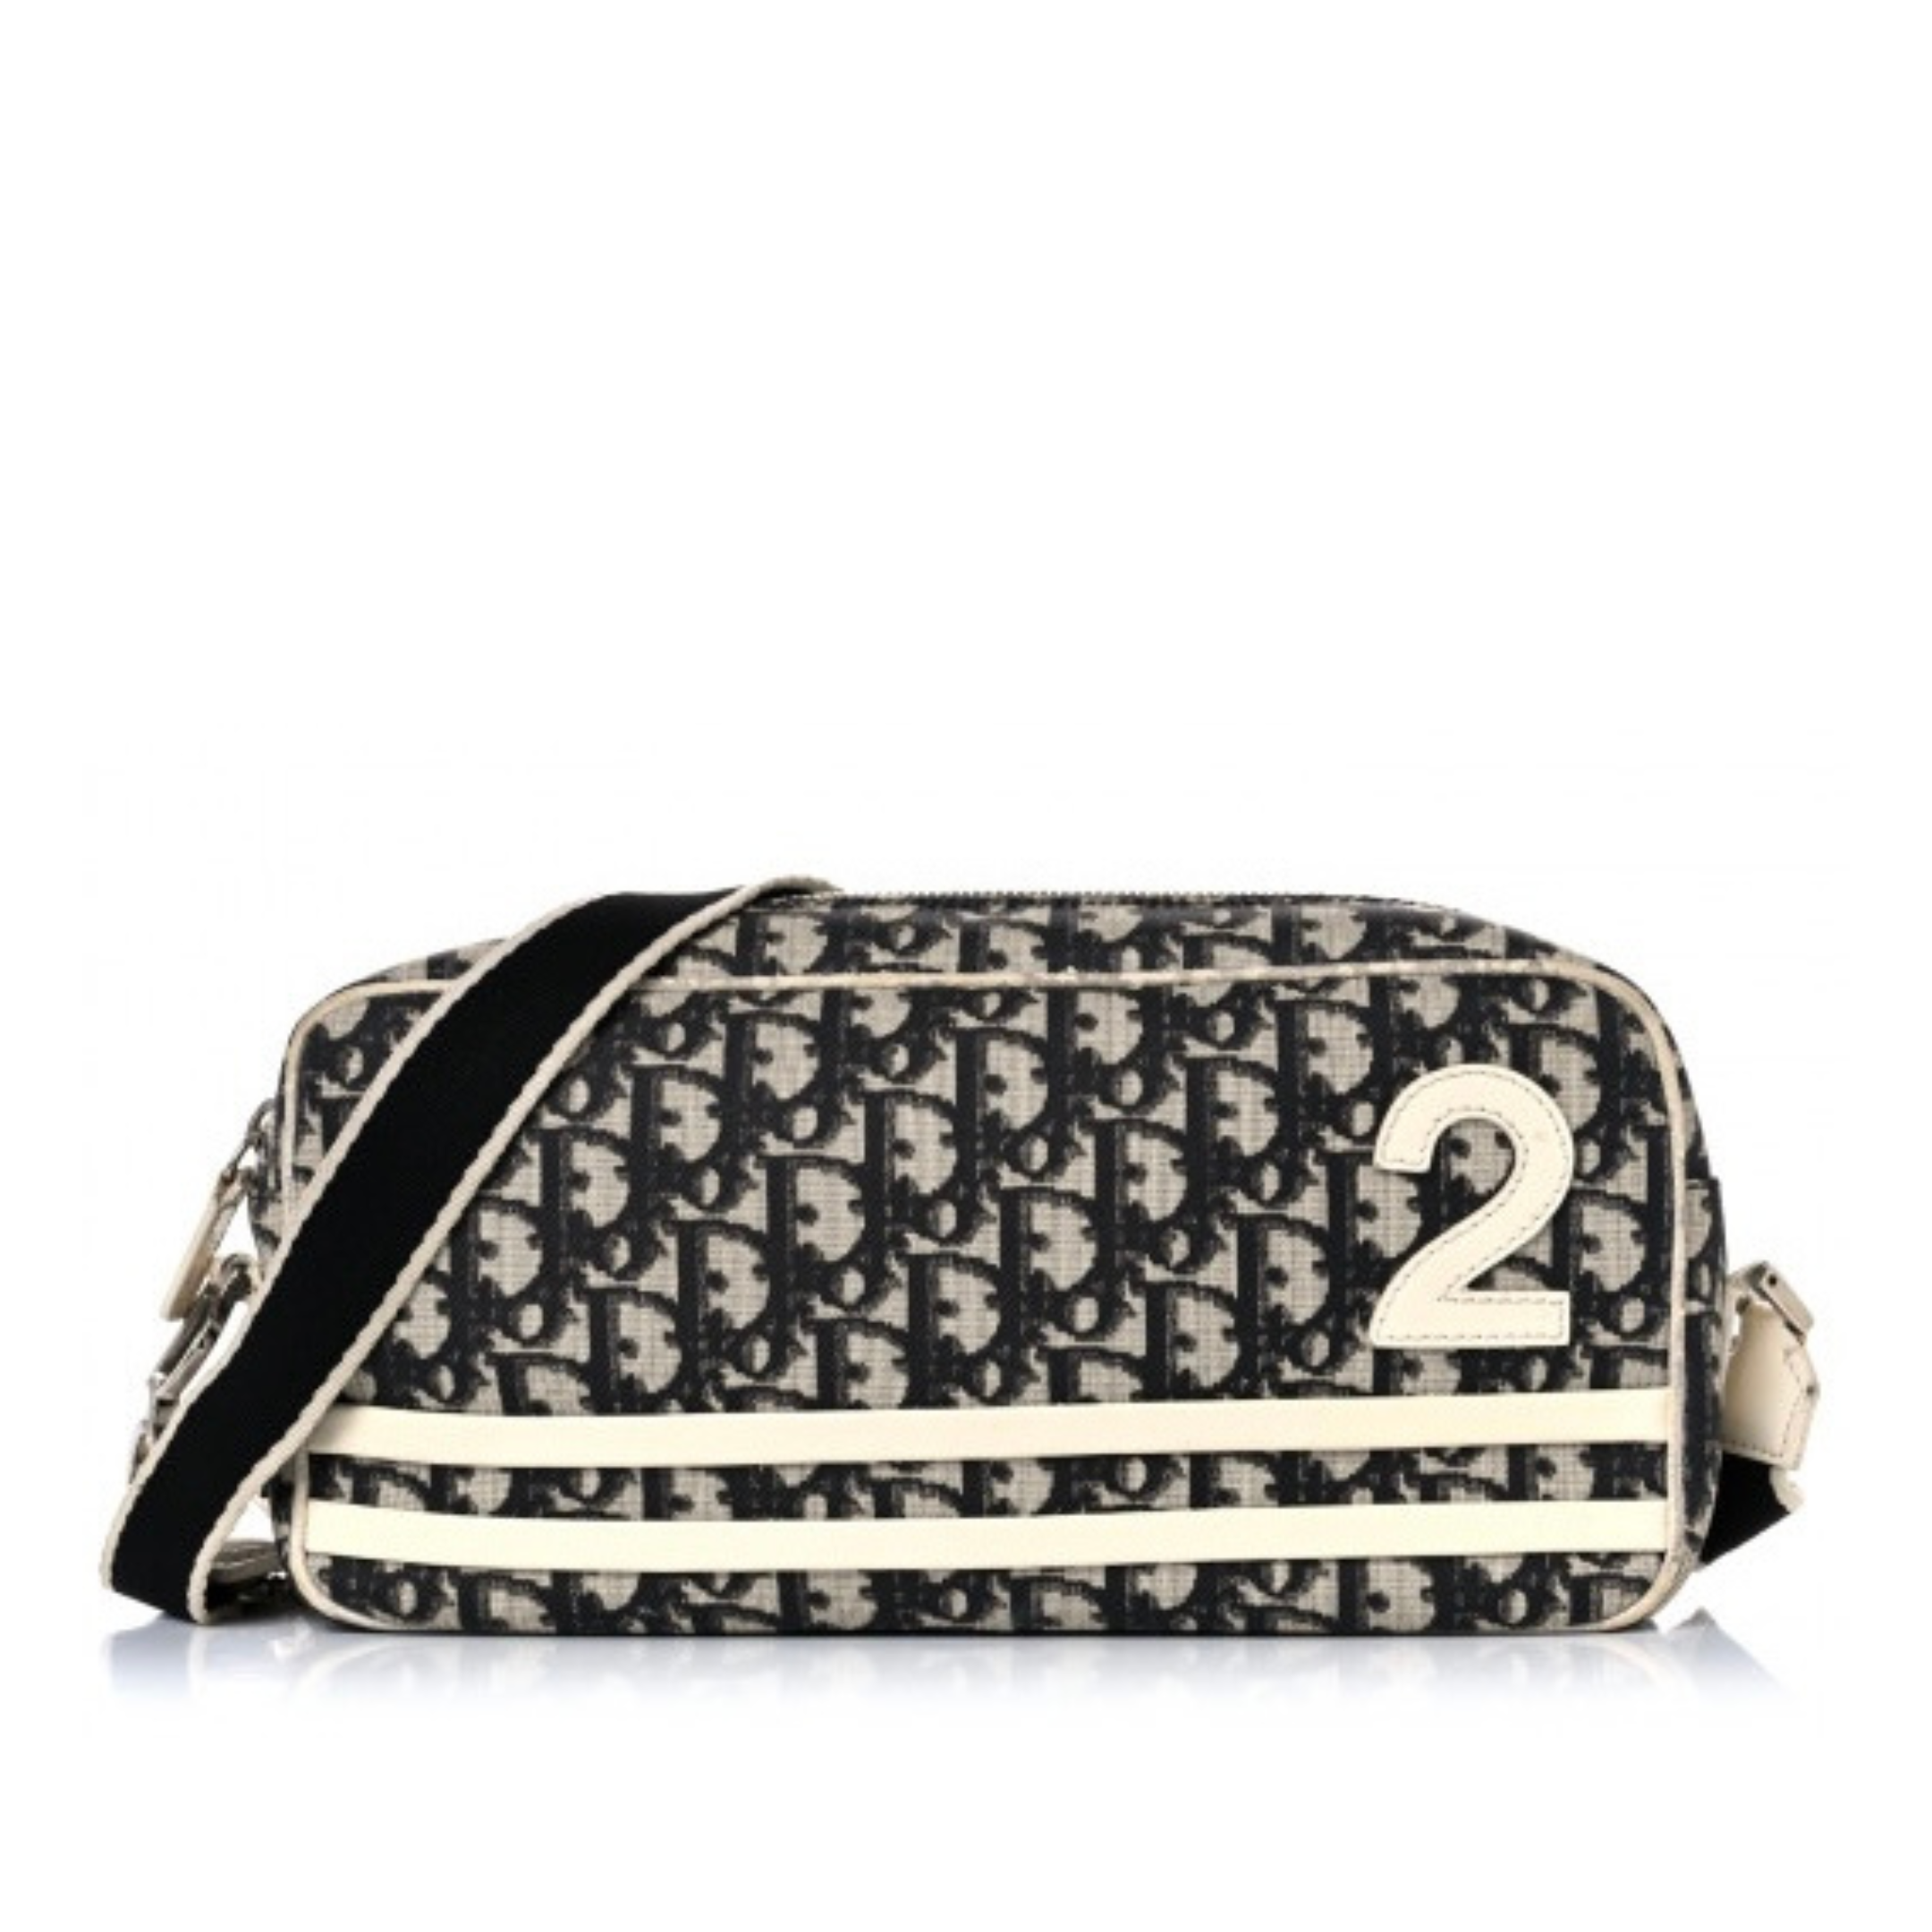 Luxury Pre-Loved Handbag 002-255-2000012 Russellville